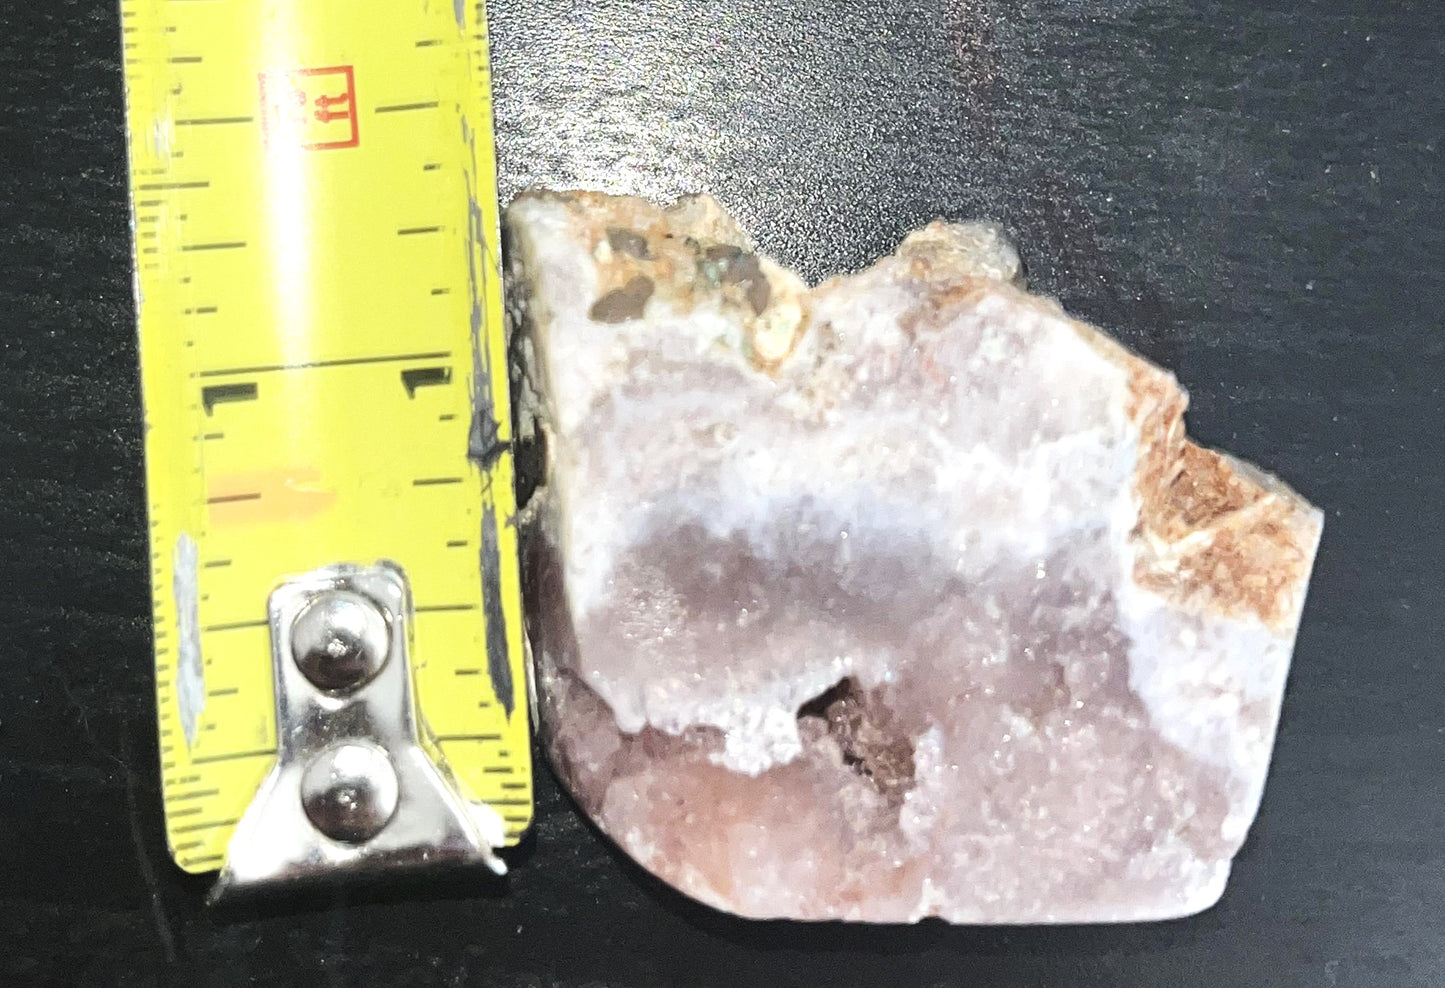 Pink Amethyst crystal specimens- very sparkly with quartz crystal druzy